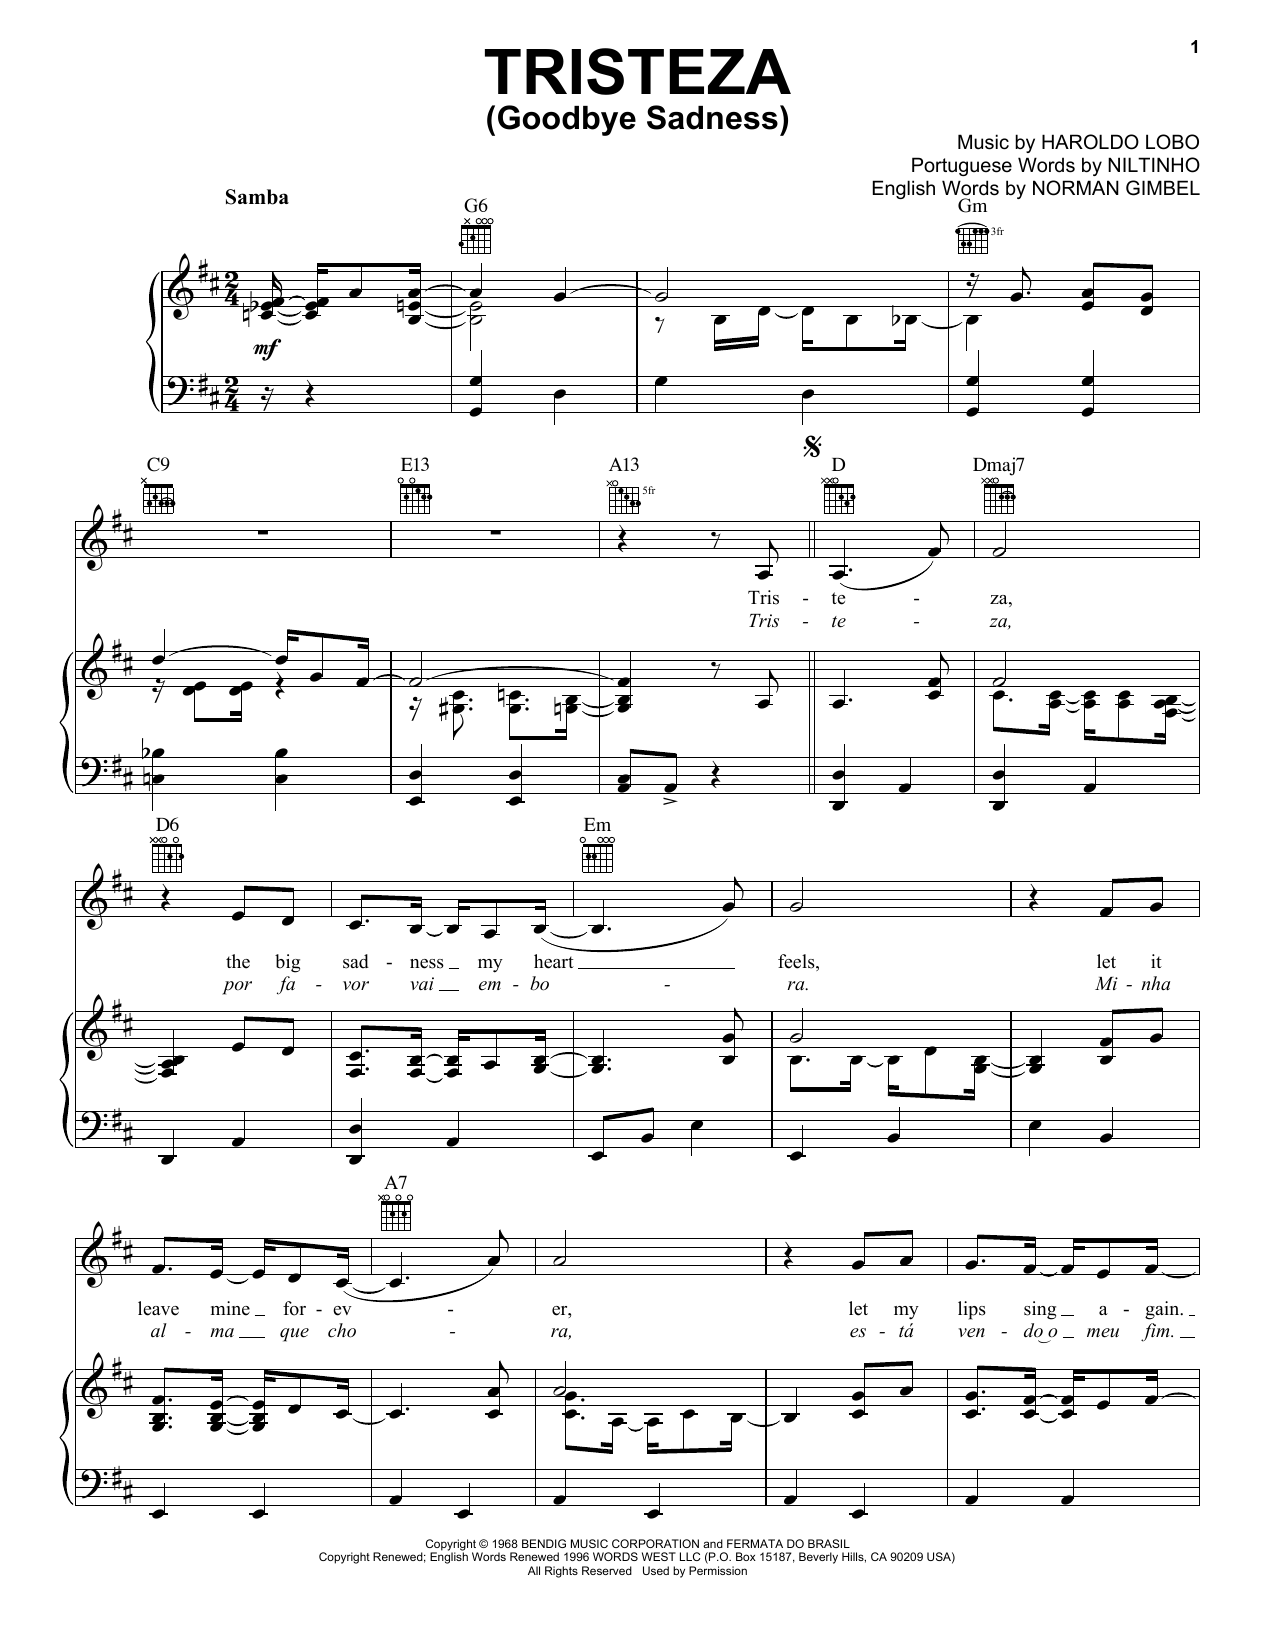 Niltinho Tristeza (Goodbye Sadness) Sheet Music Notes & Chords for Piano, Vocal & Guitar (Right-Hand Melody) - Download or Print PDF